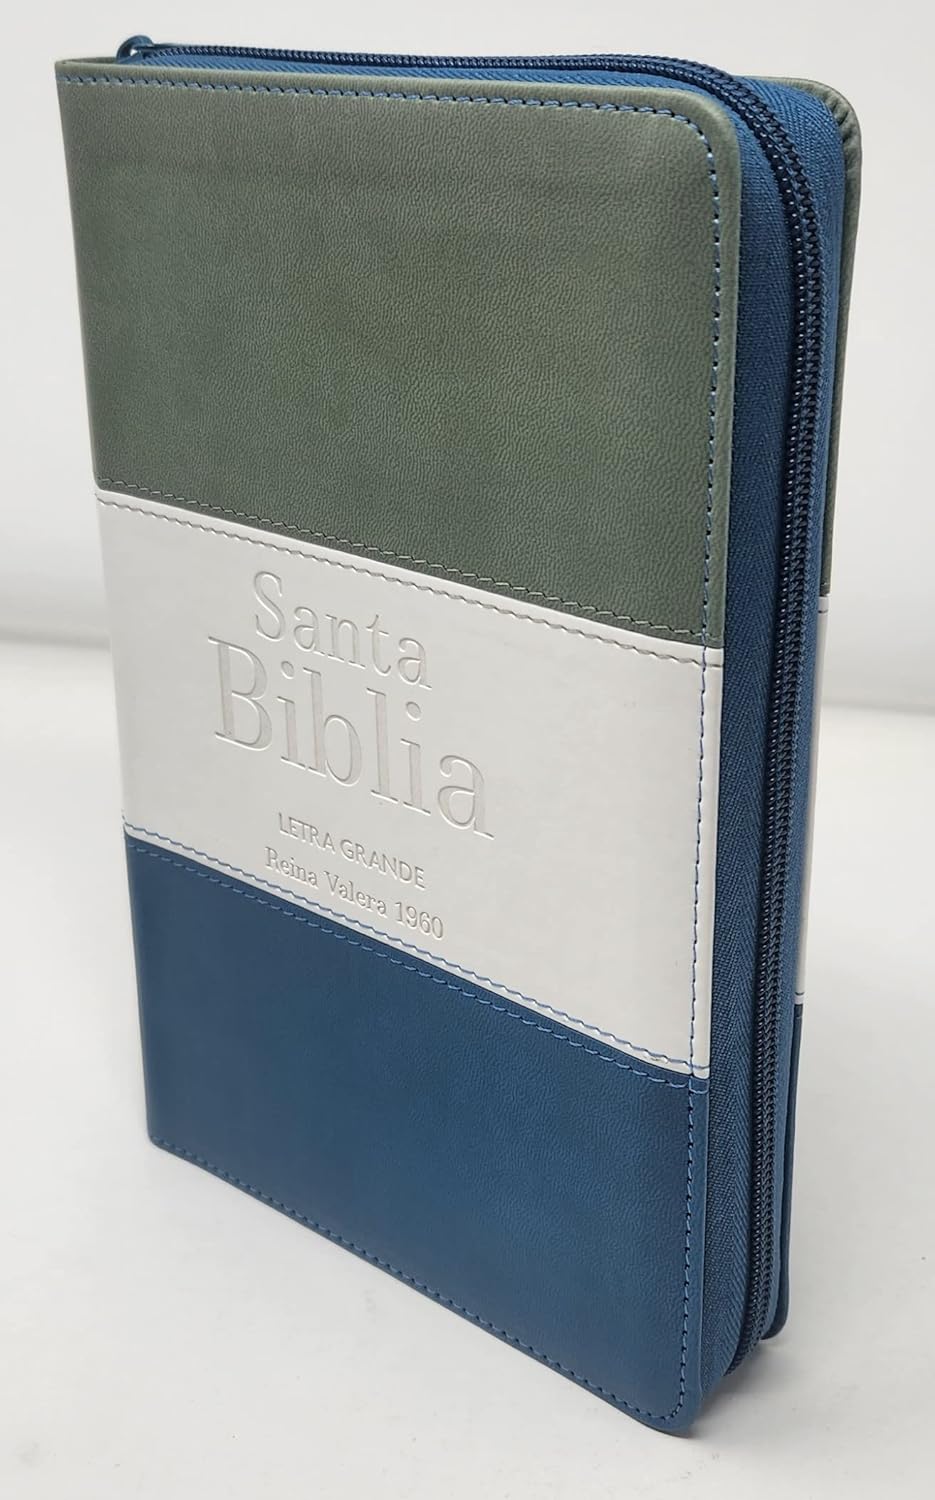 Espagnol, Bible, Reina Valera 1960, gros caractères, grand format, similicuir souple, tricolore,...